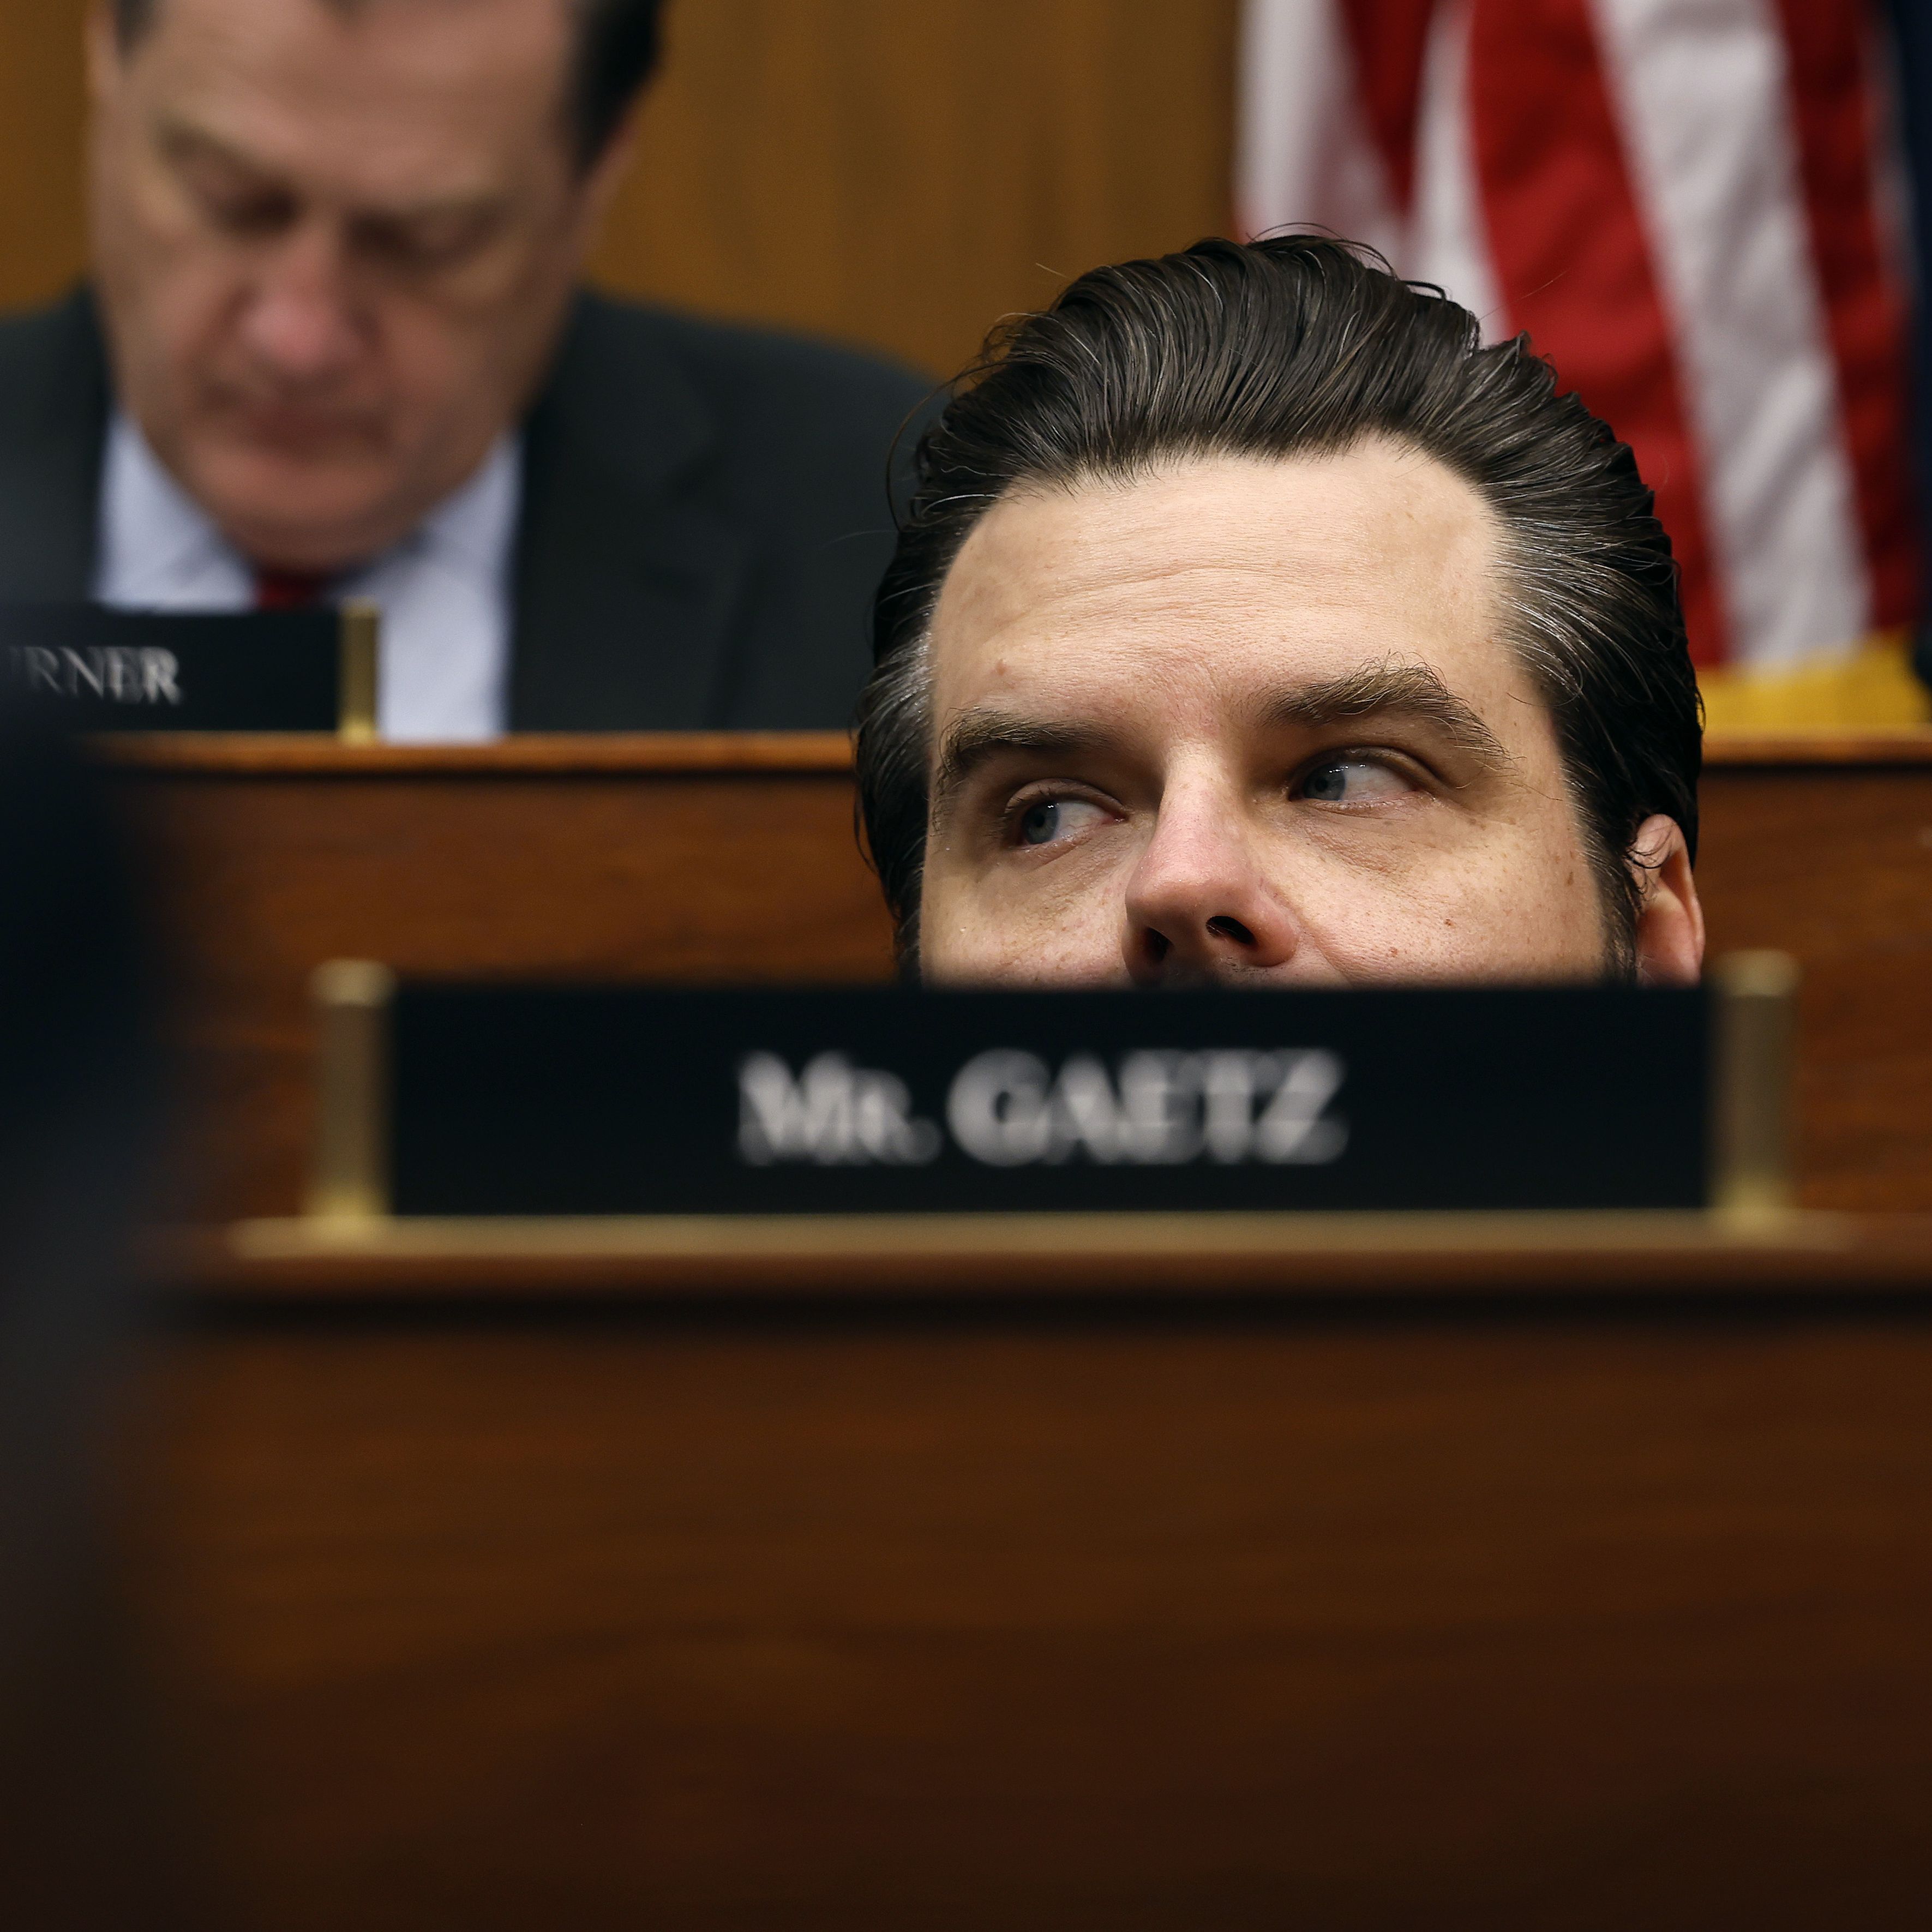 The House Ethics Committee Has Matt Gaetz's Number